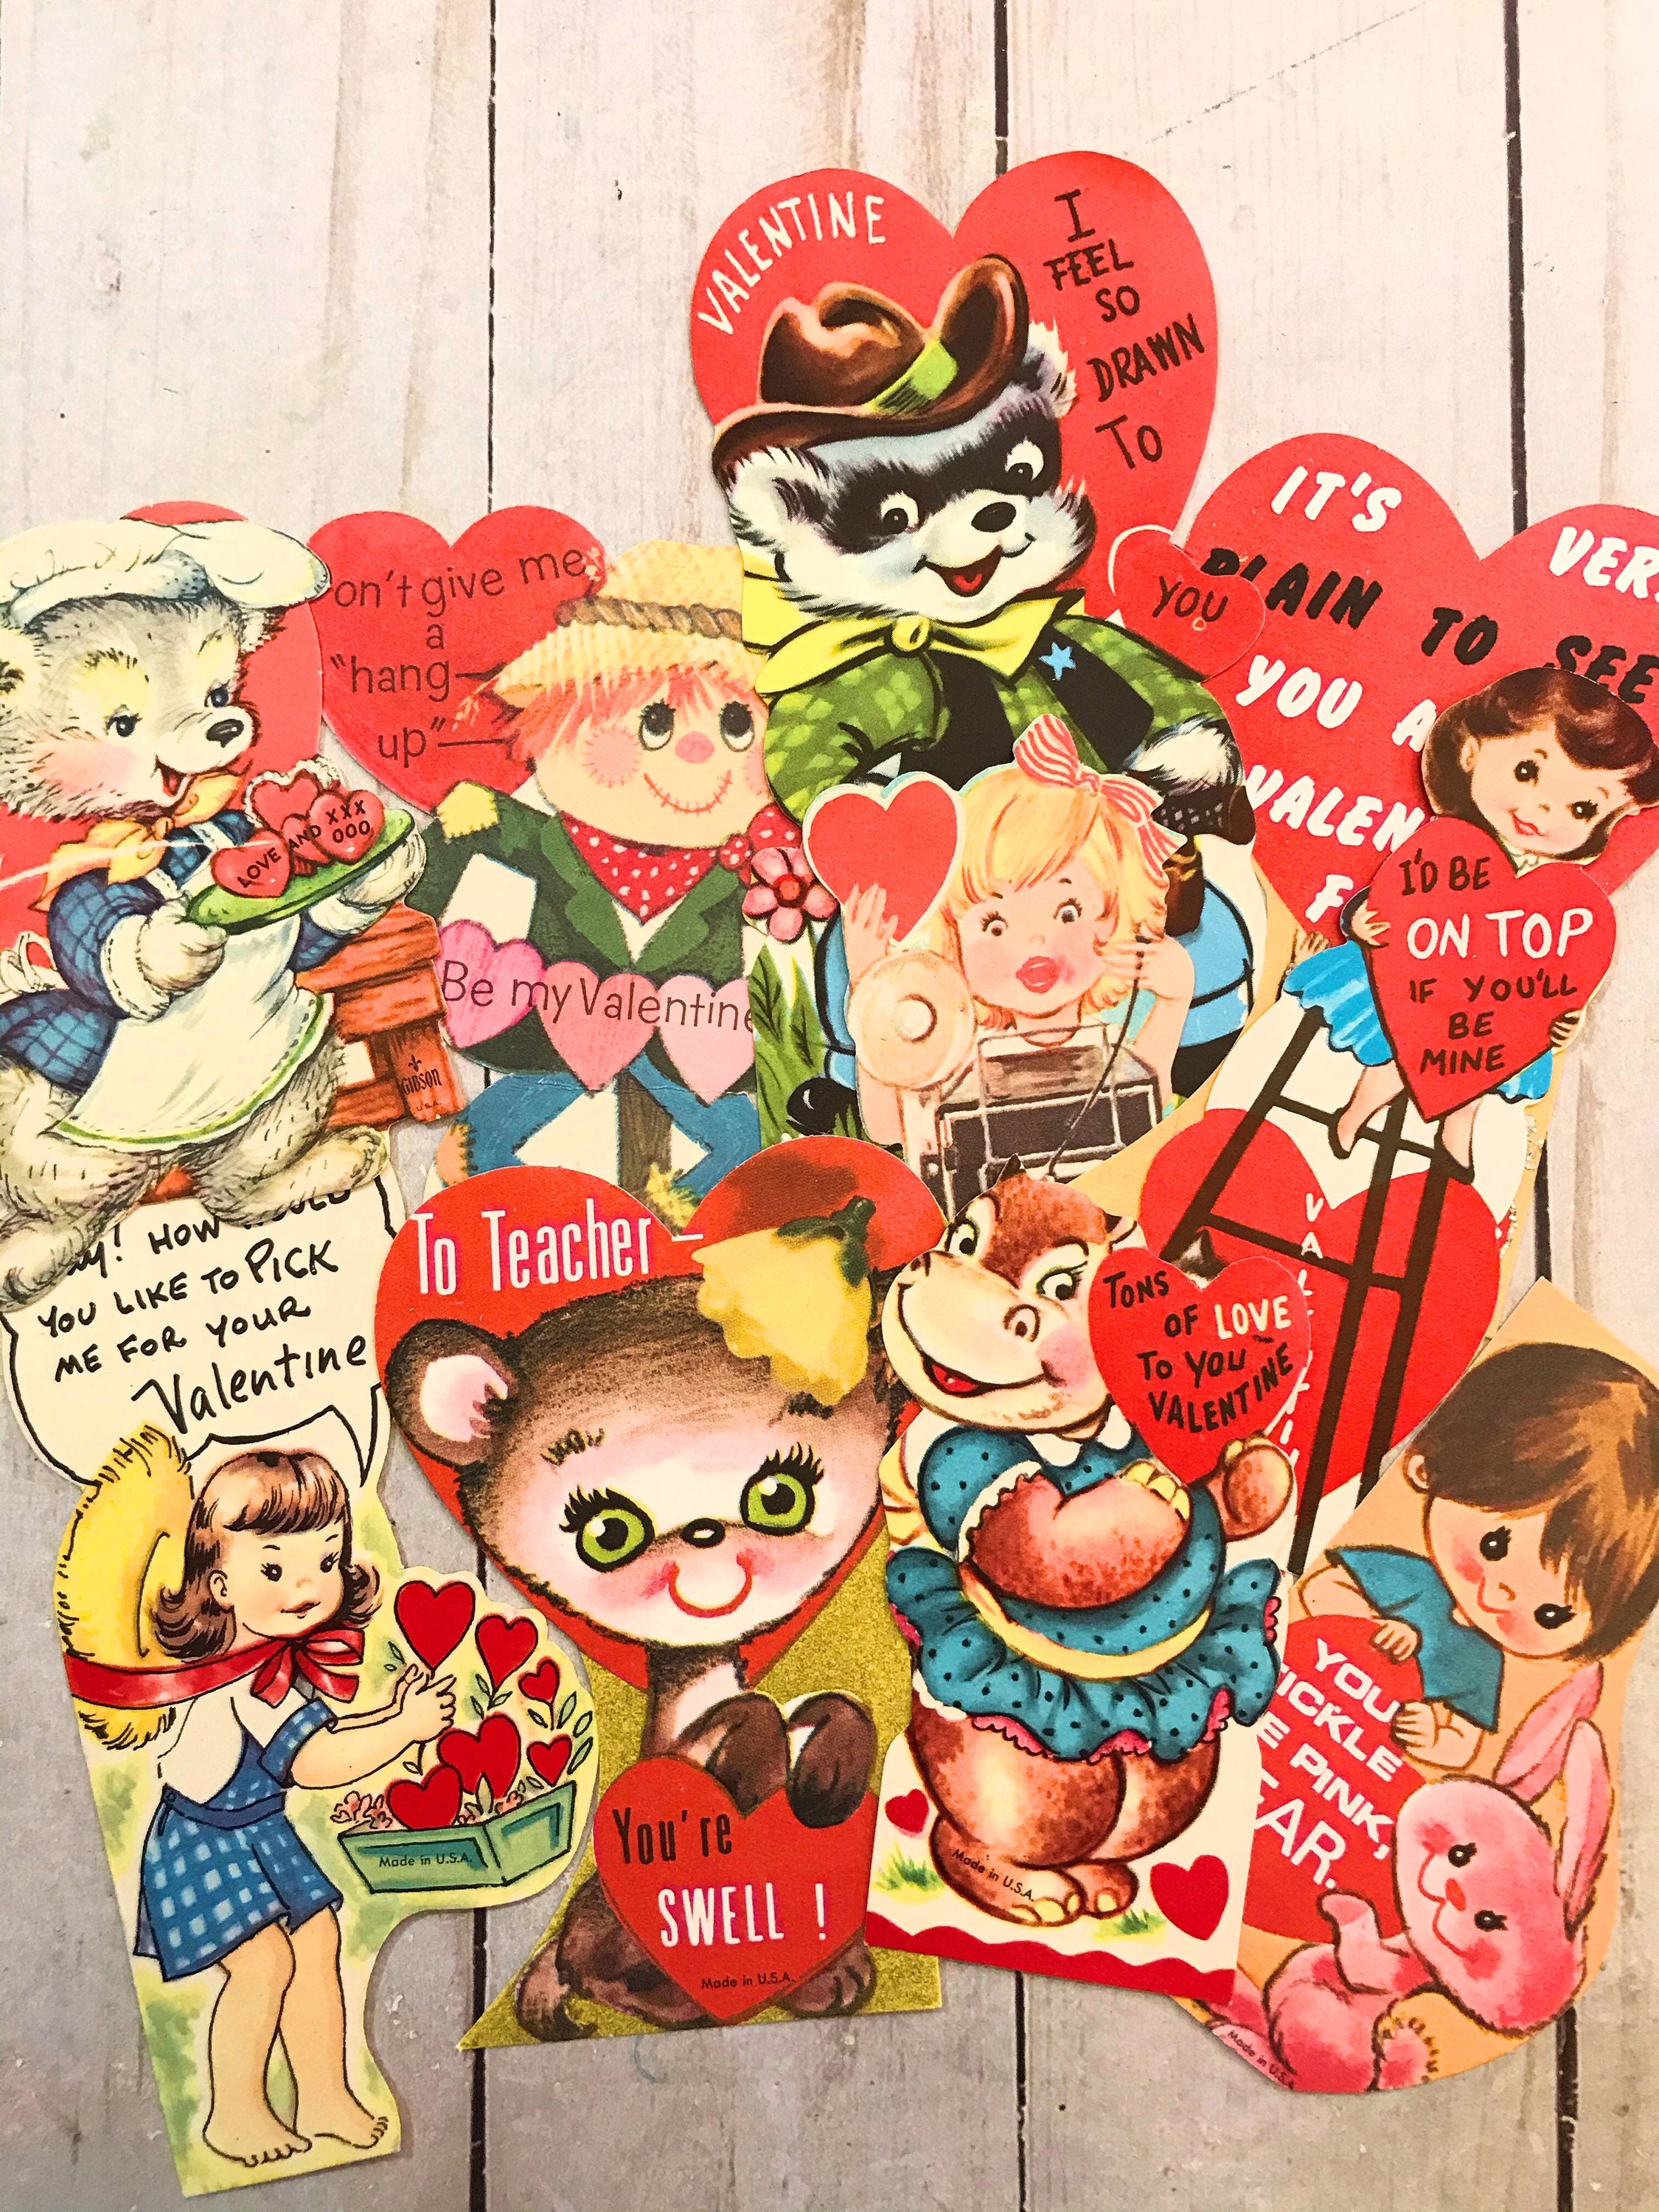 SWEET Vintage Valentines Day Card, Cute Little Girl, Colorful Vintage Die  Cut Valentine,Collectible Valentines